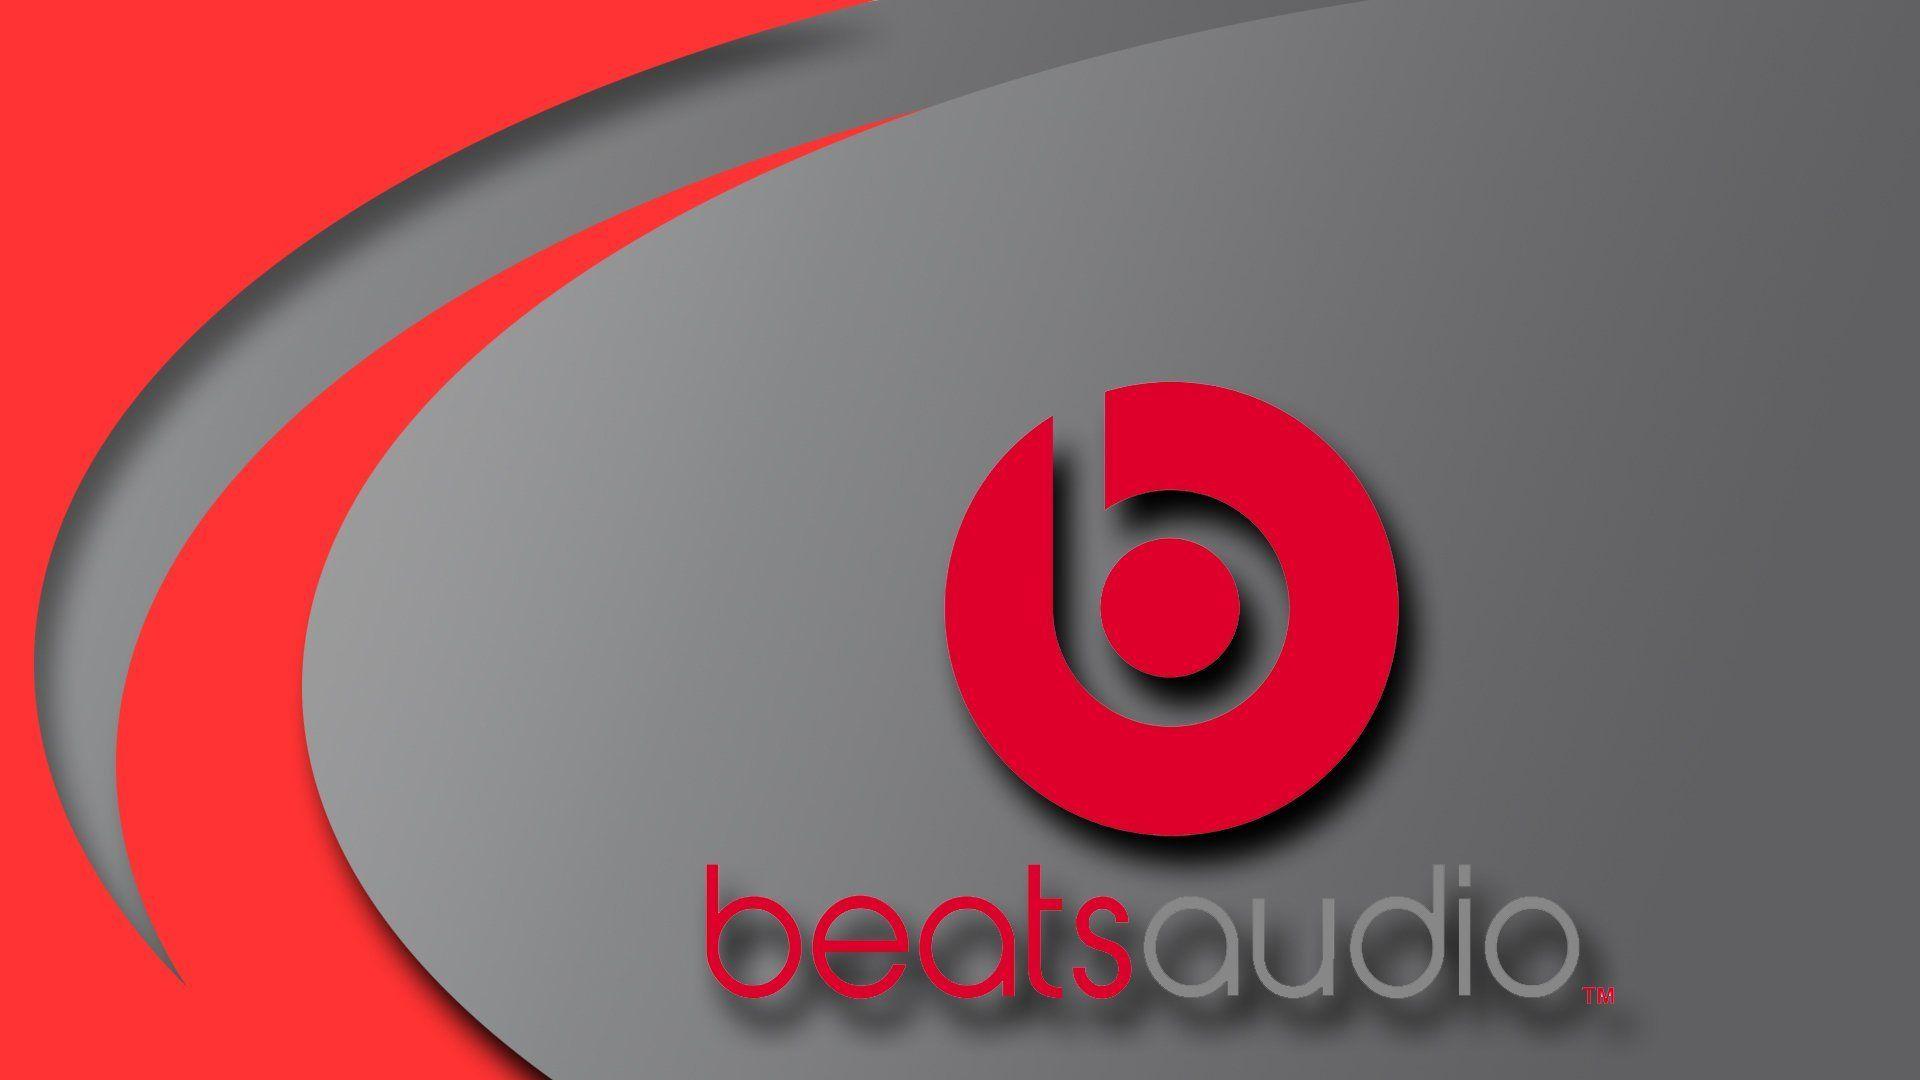 beatsaudio beats audio htc by dr dreaudio music dr.dre beats logo